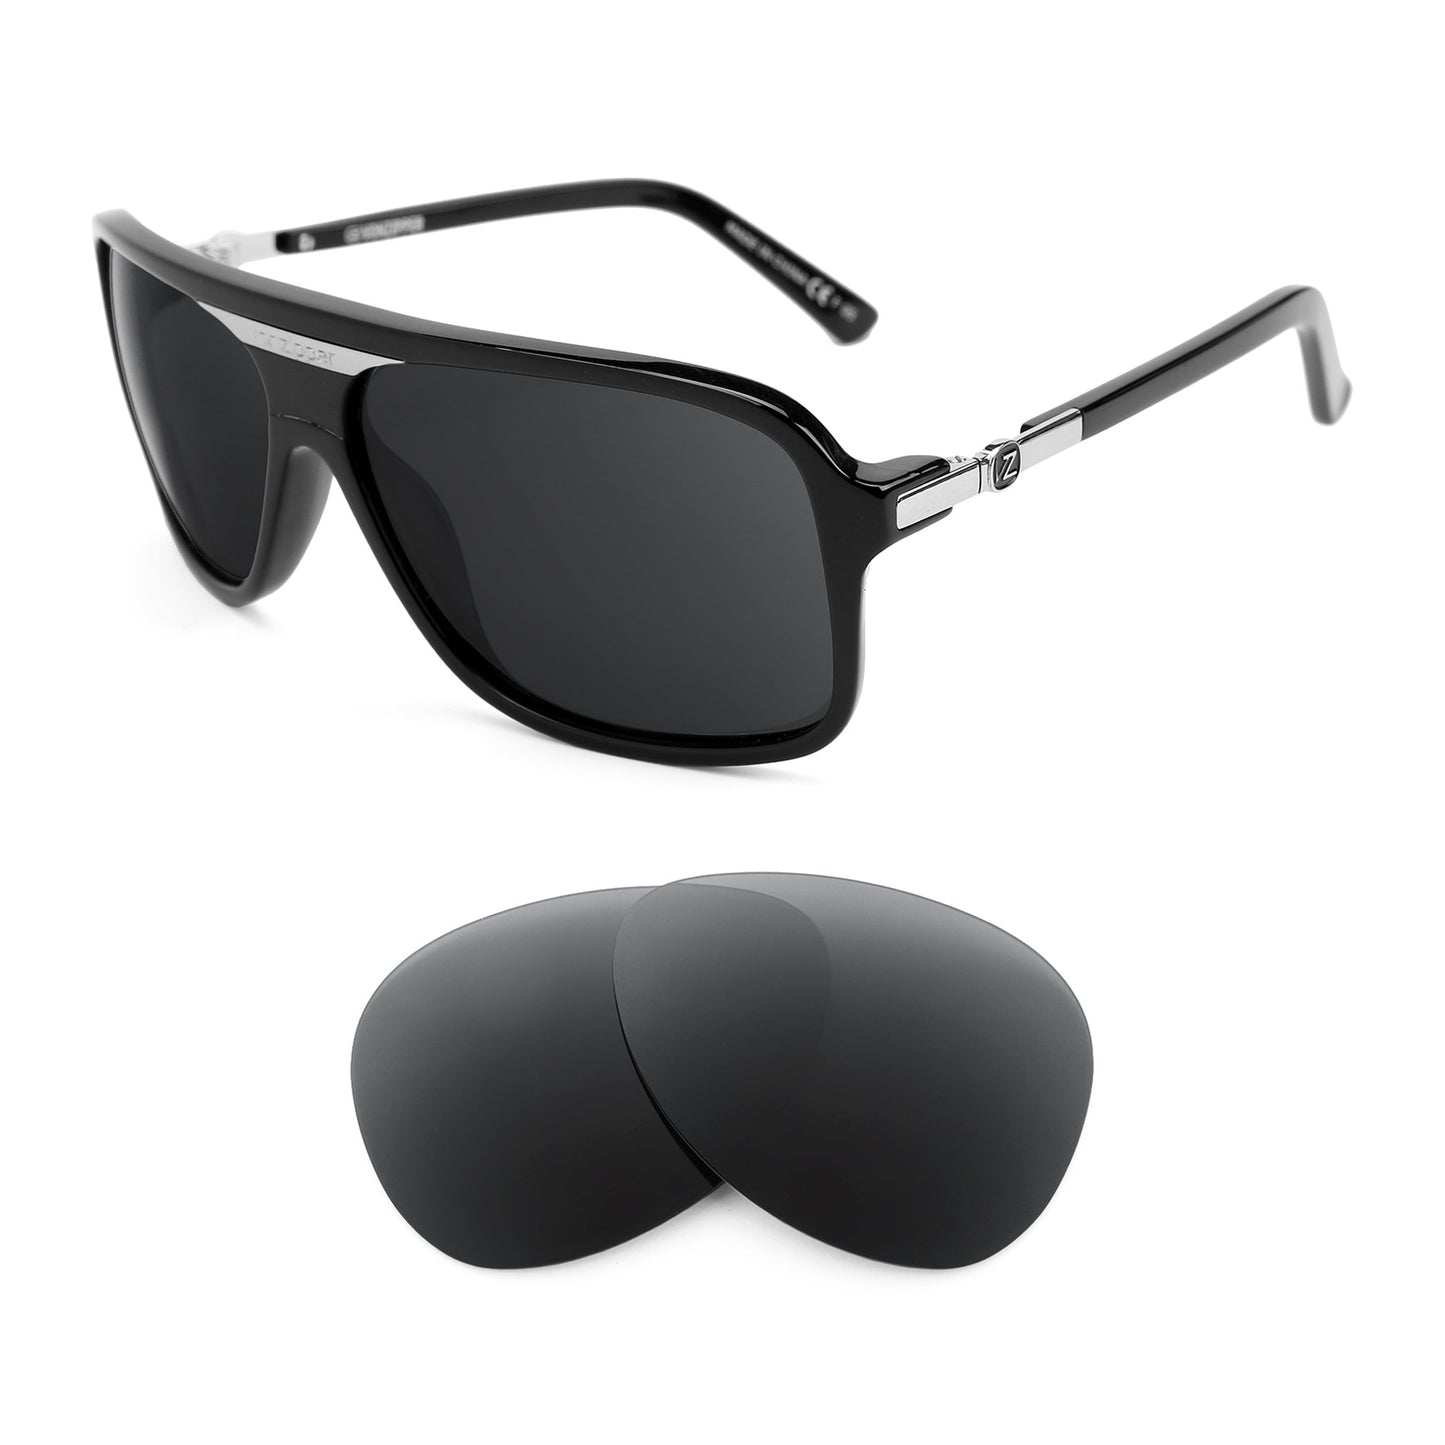 VonZipper Stache sunglasses with replacement lenses